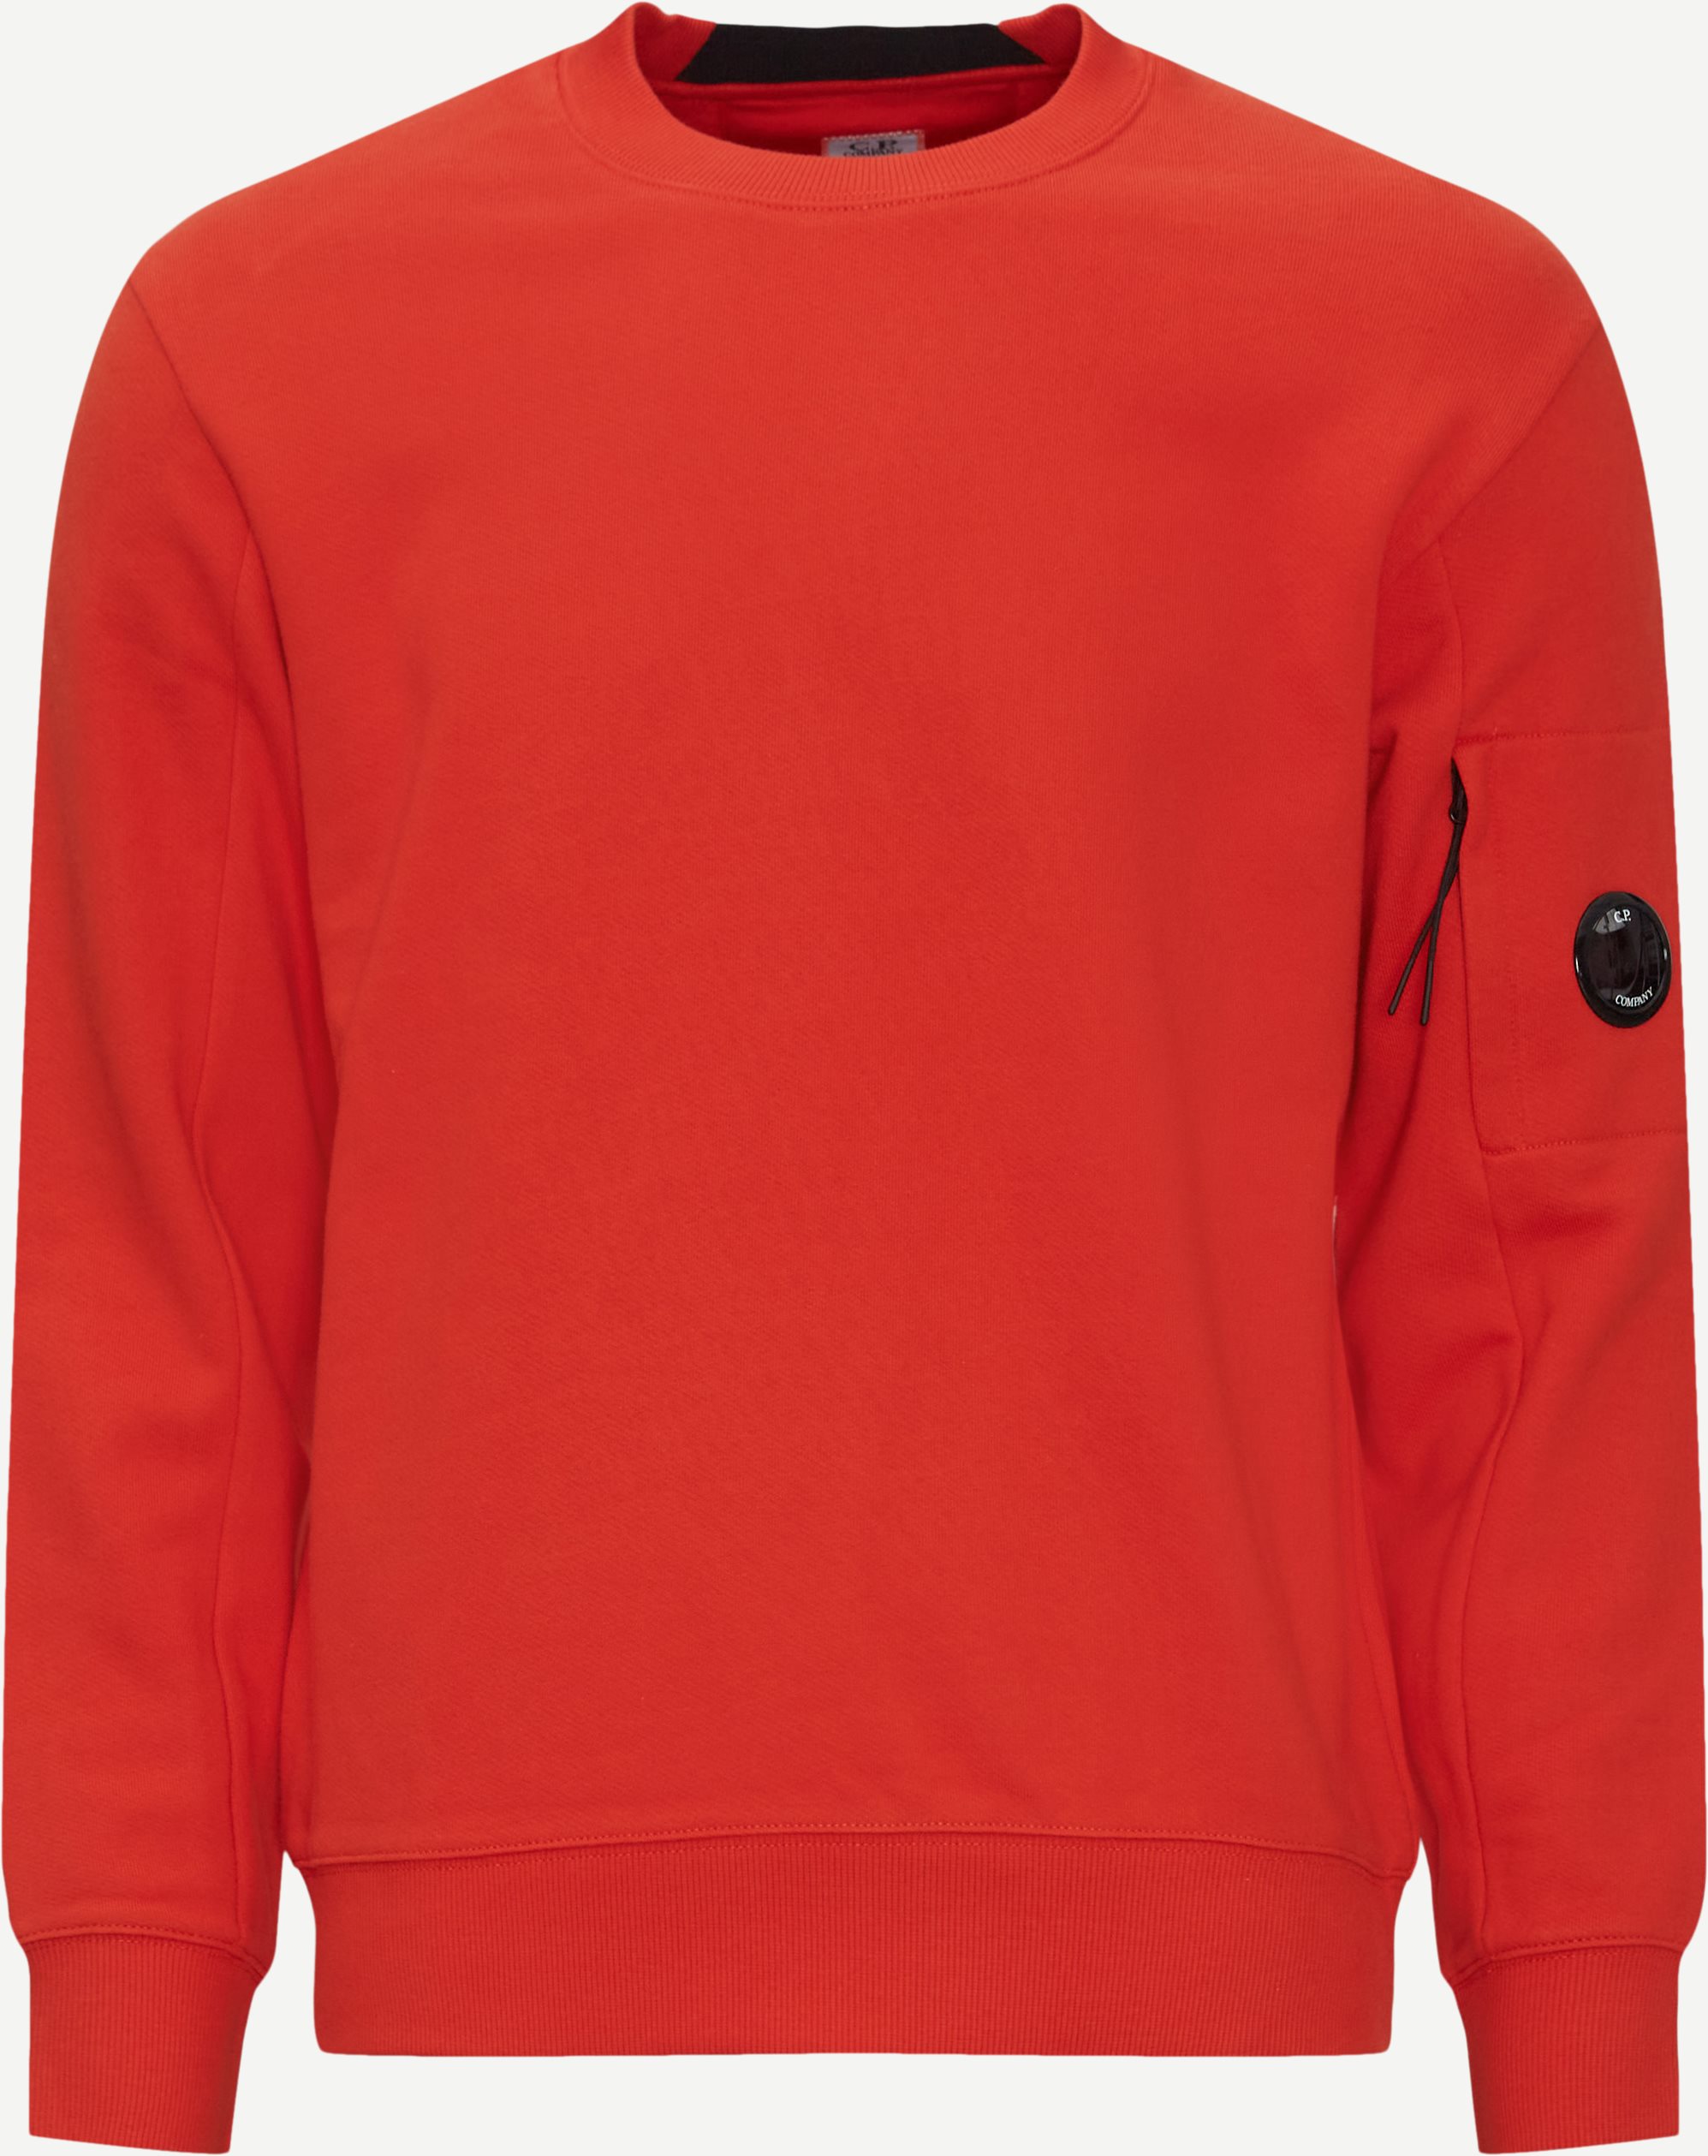 Sweatshirts - Regular fit - Red